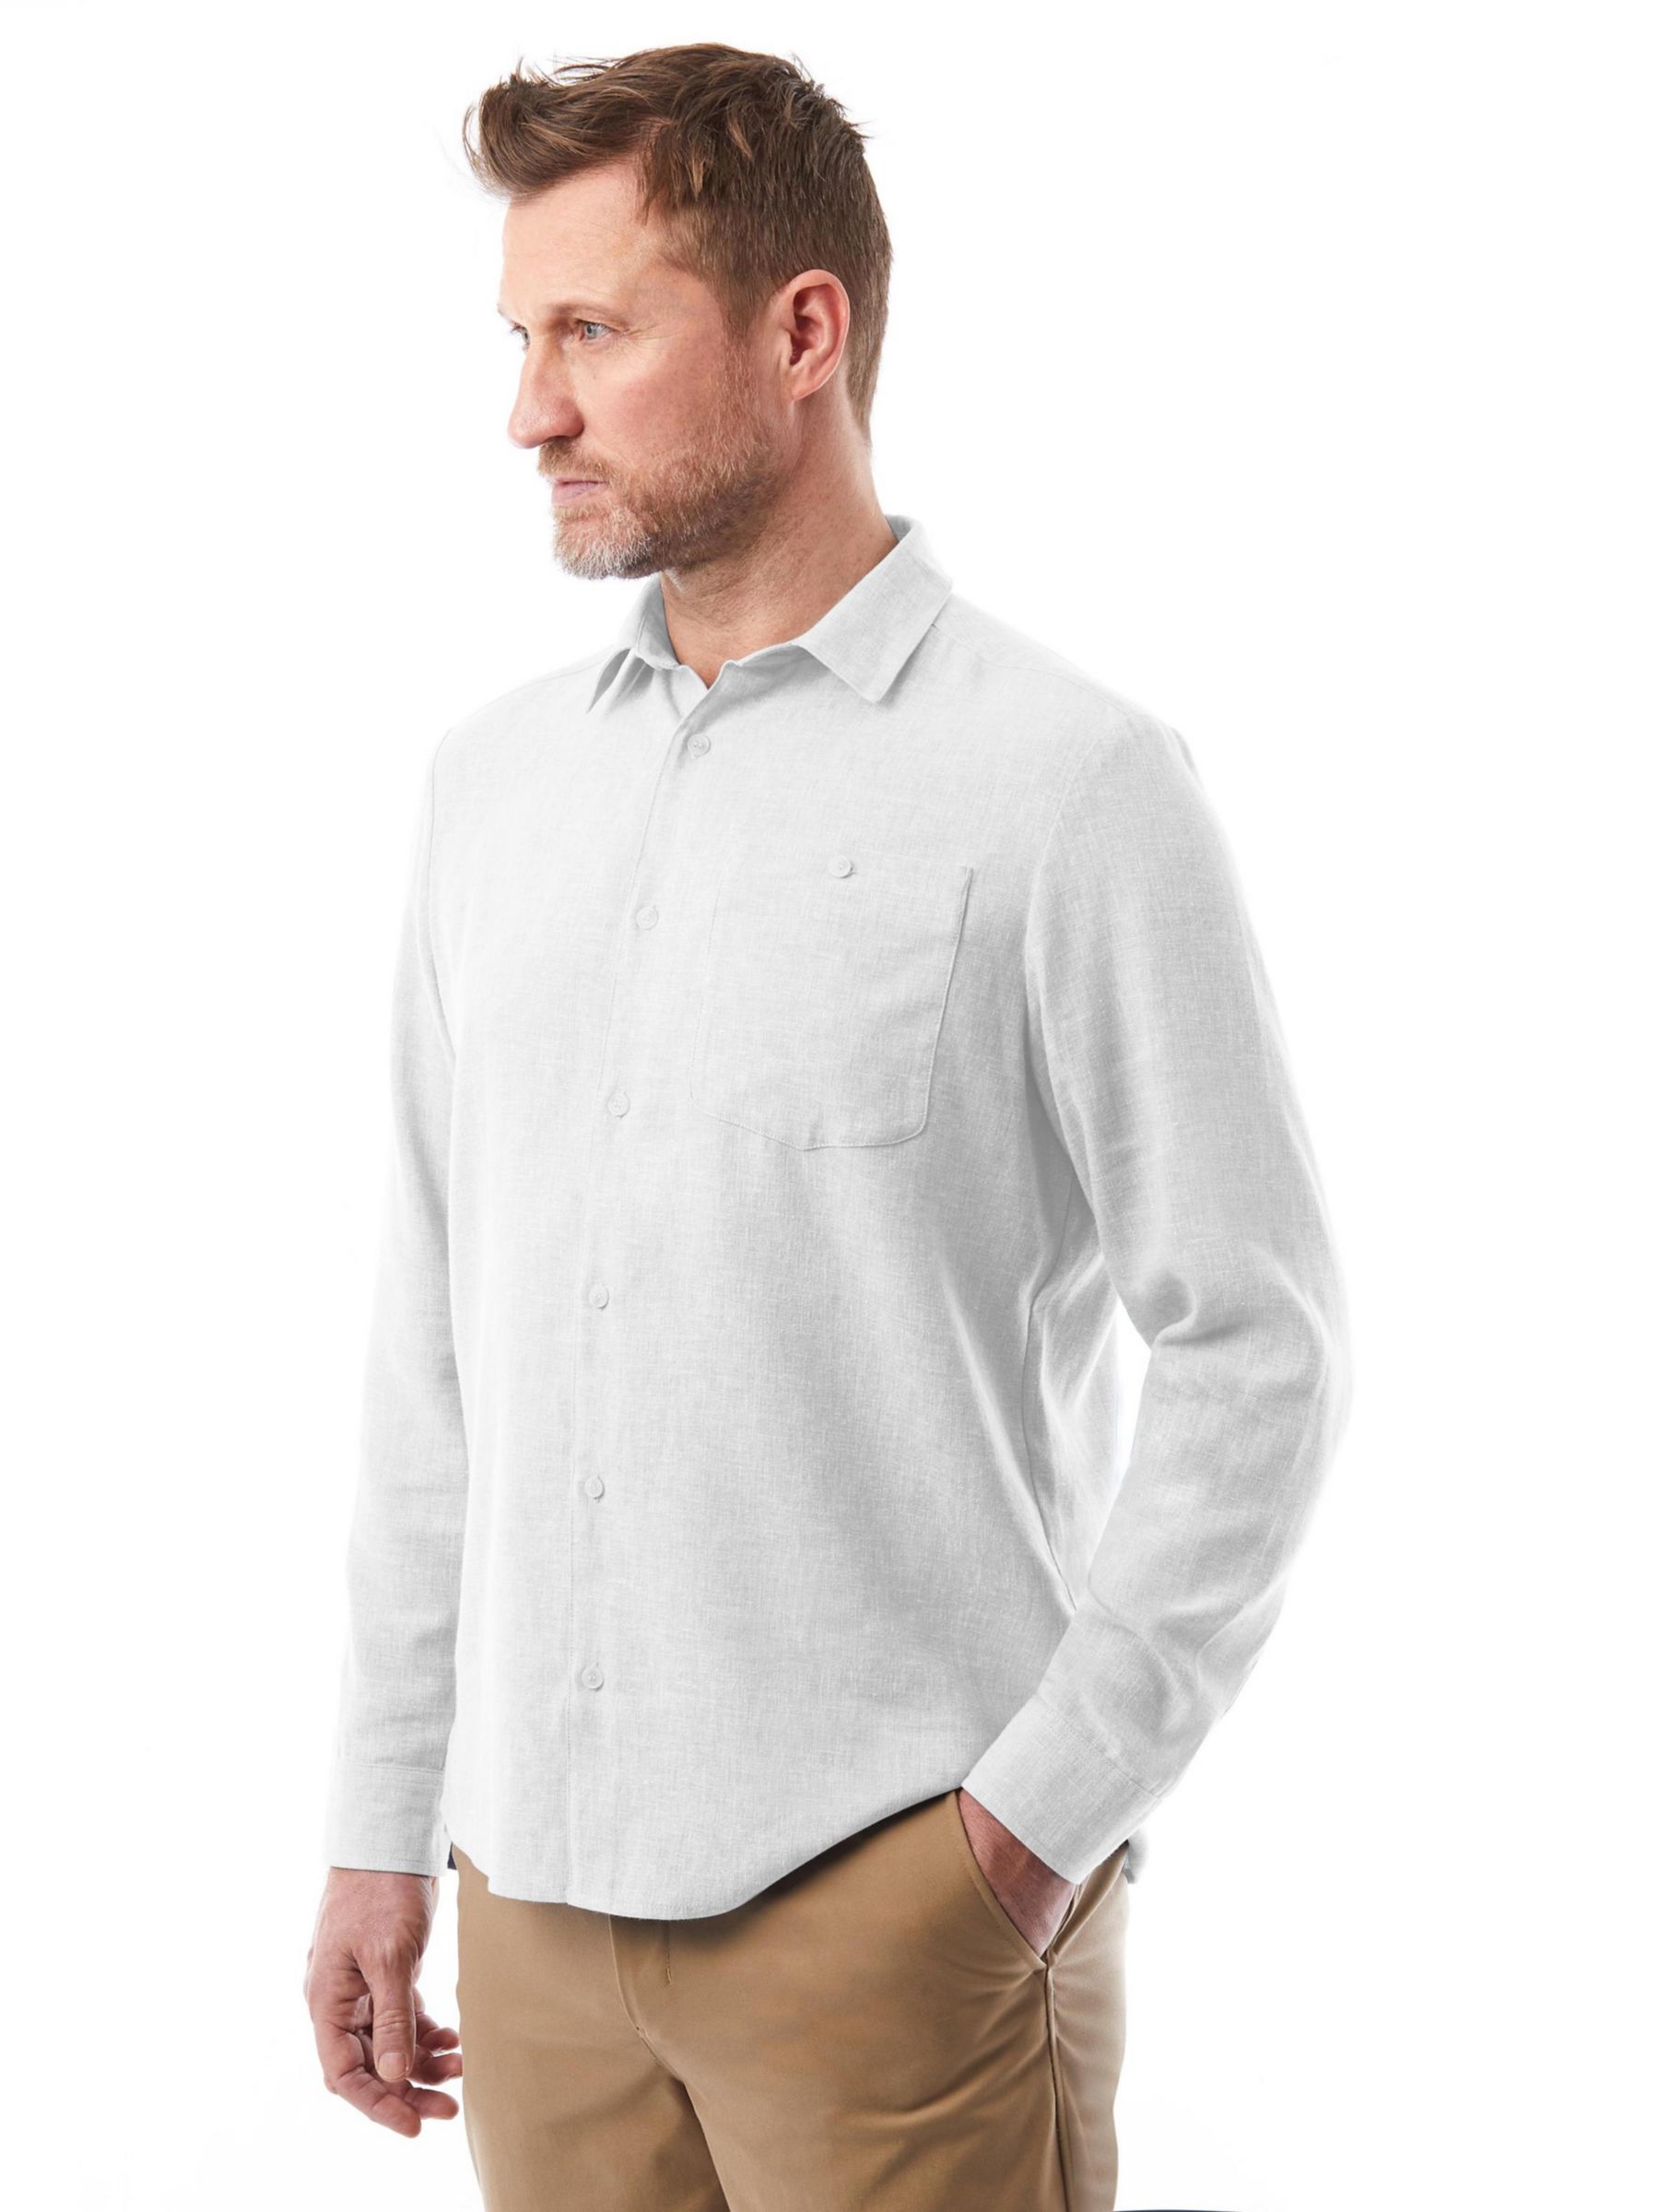 Rohan Porto Linen Long Sleeve Shirt, White, S